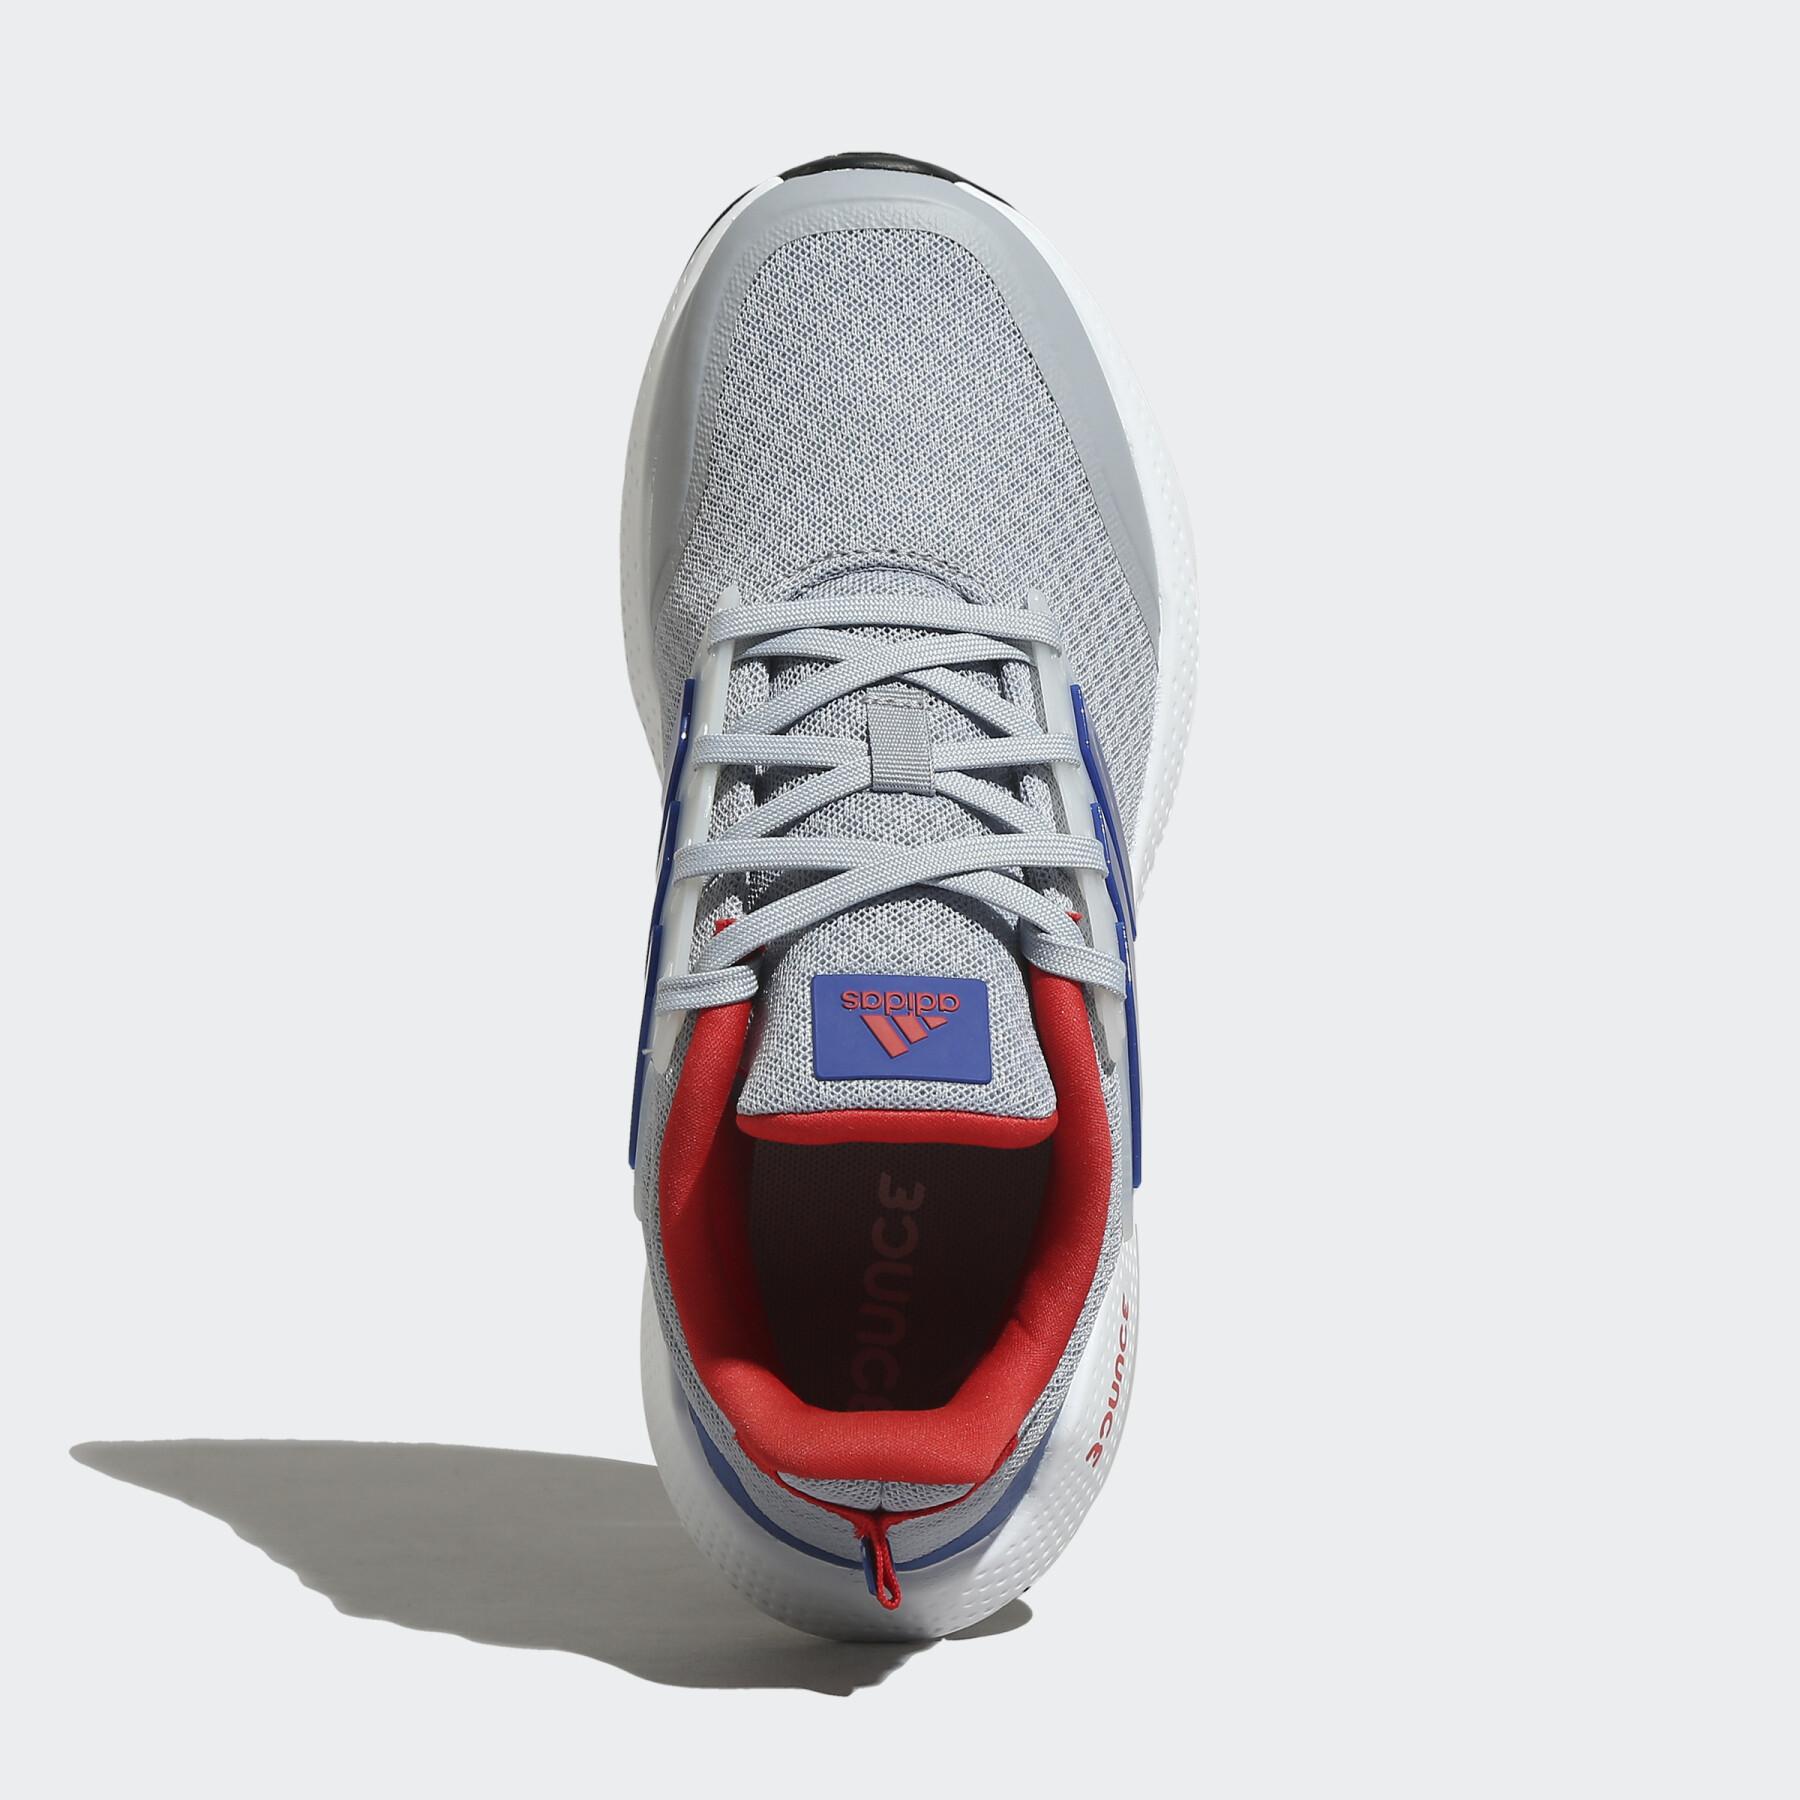 Children's running shoes adidas EQ21 2.0